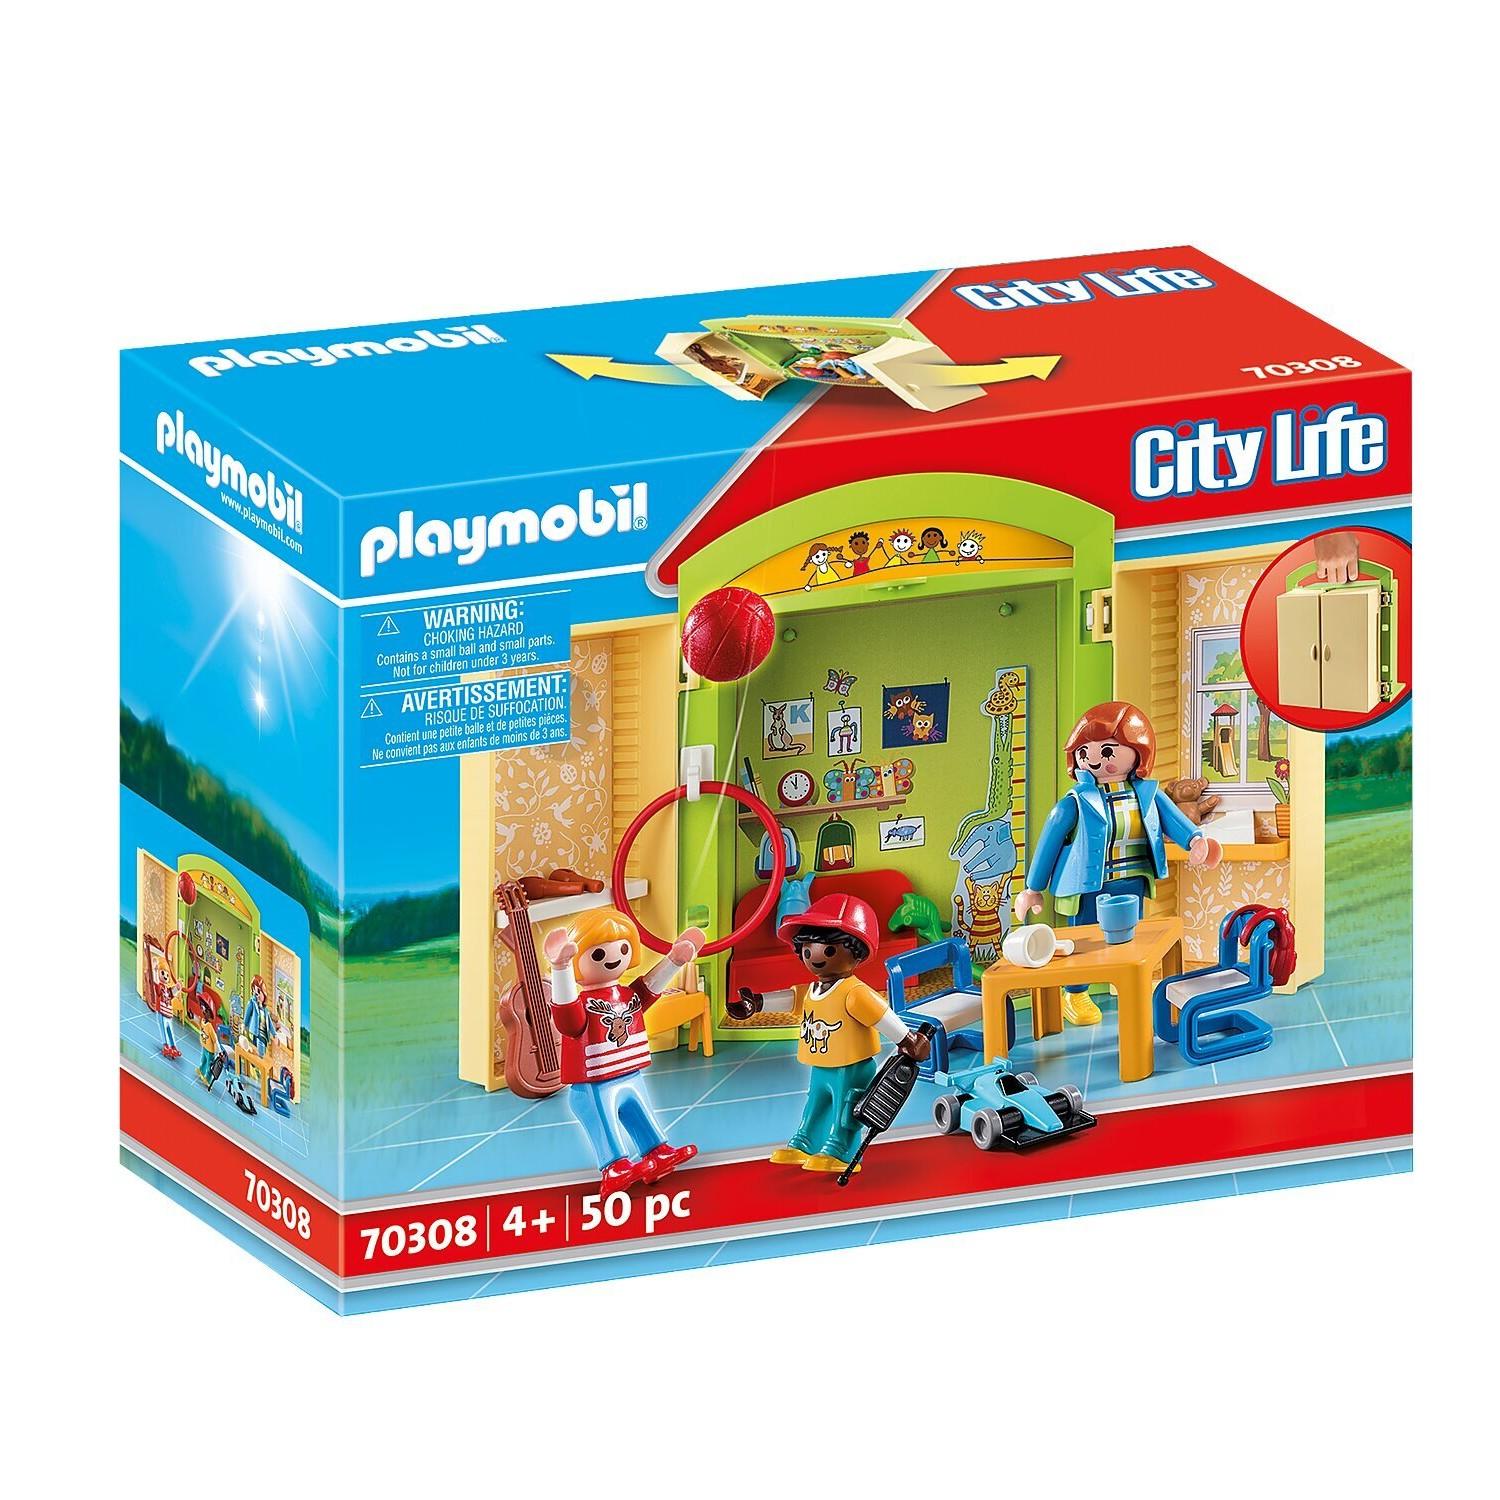 Playmobil Coffret École  Playmobil, Playset, School sets